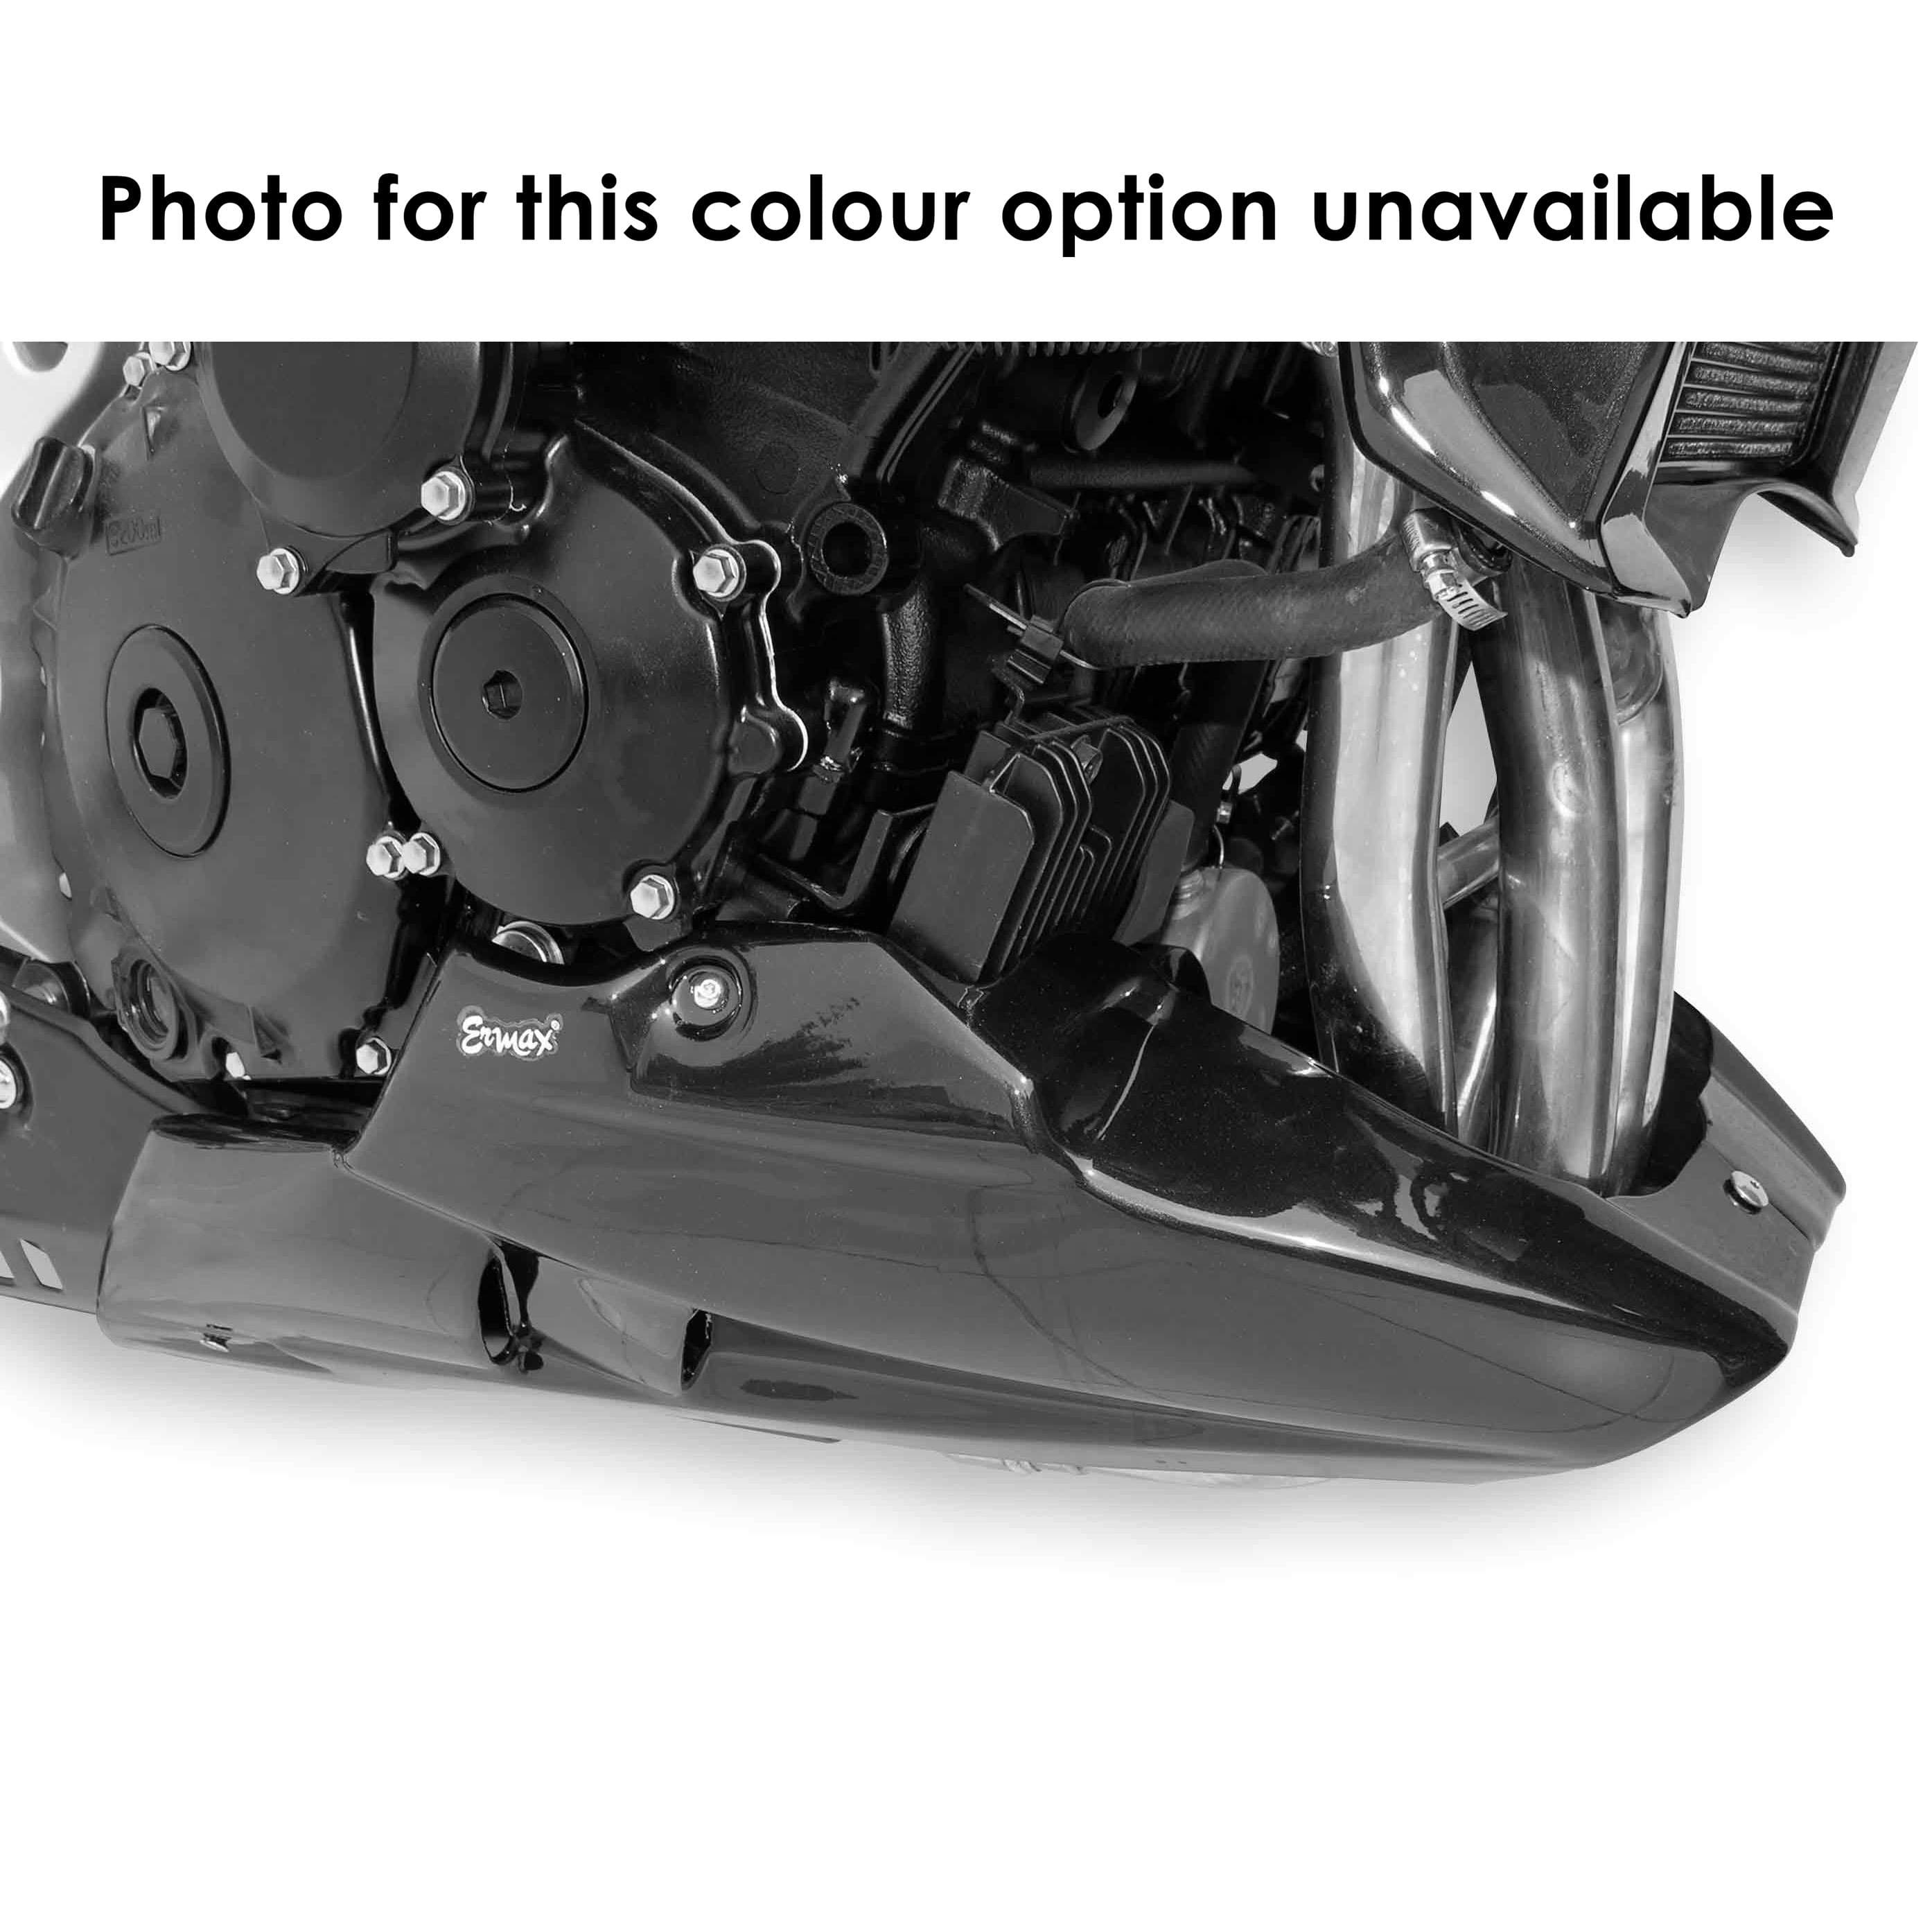 Ermax Belly Pan | Metallic White (Pearl Mirage White) | Suzuki GSR 600 2009>2011-E890421080-Belly Pans-Pyramid Motorcycle Accessories